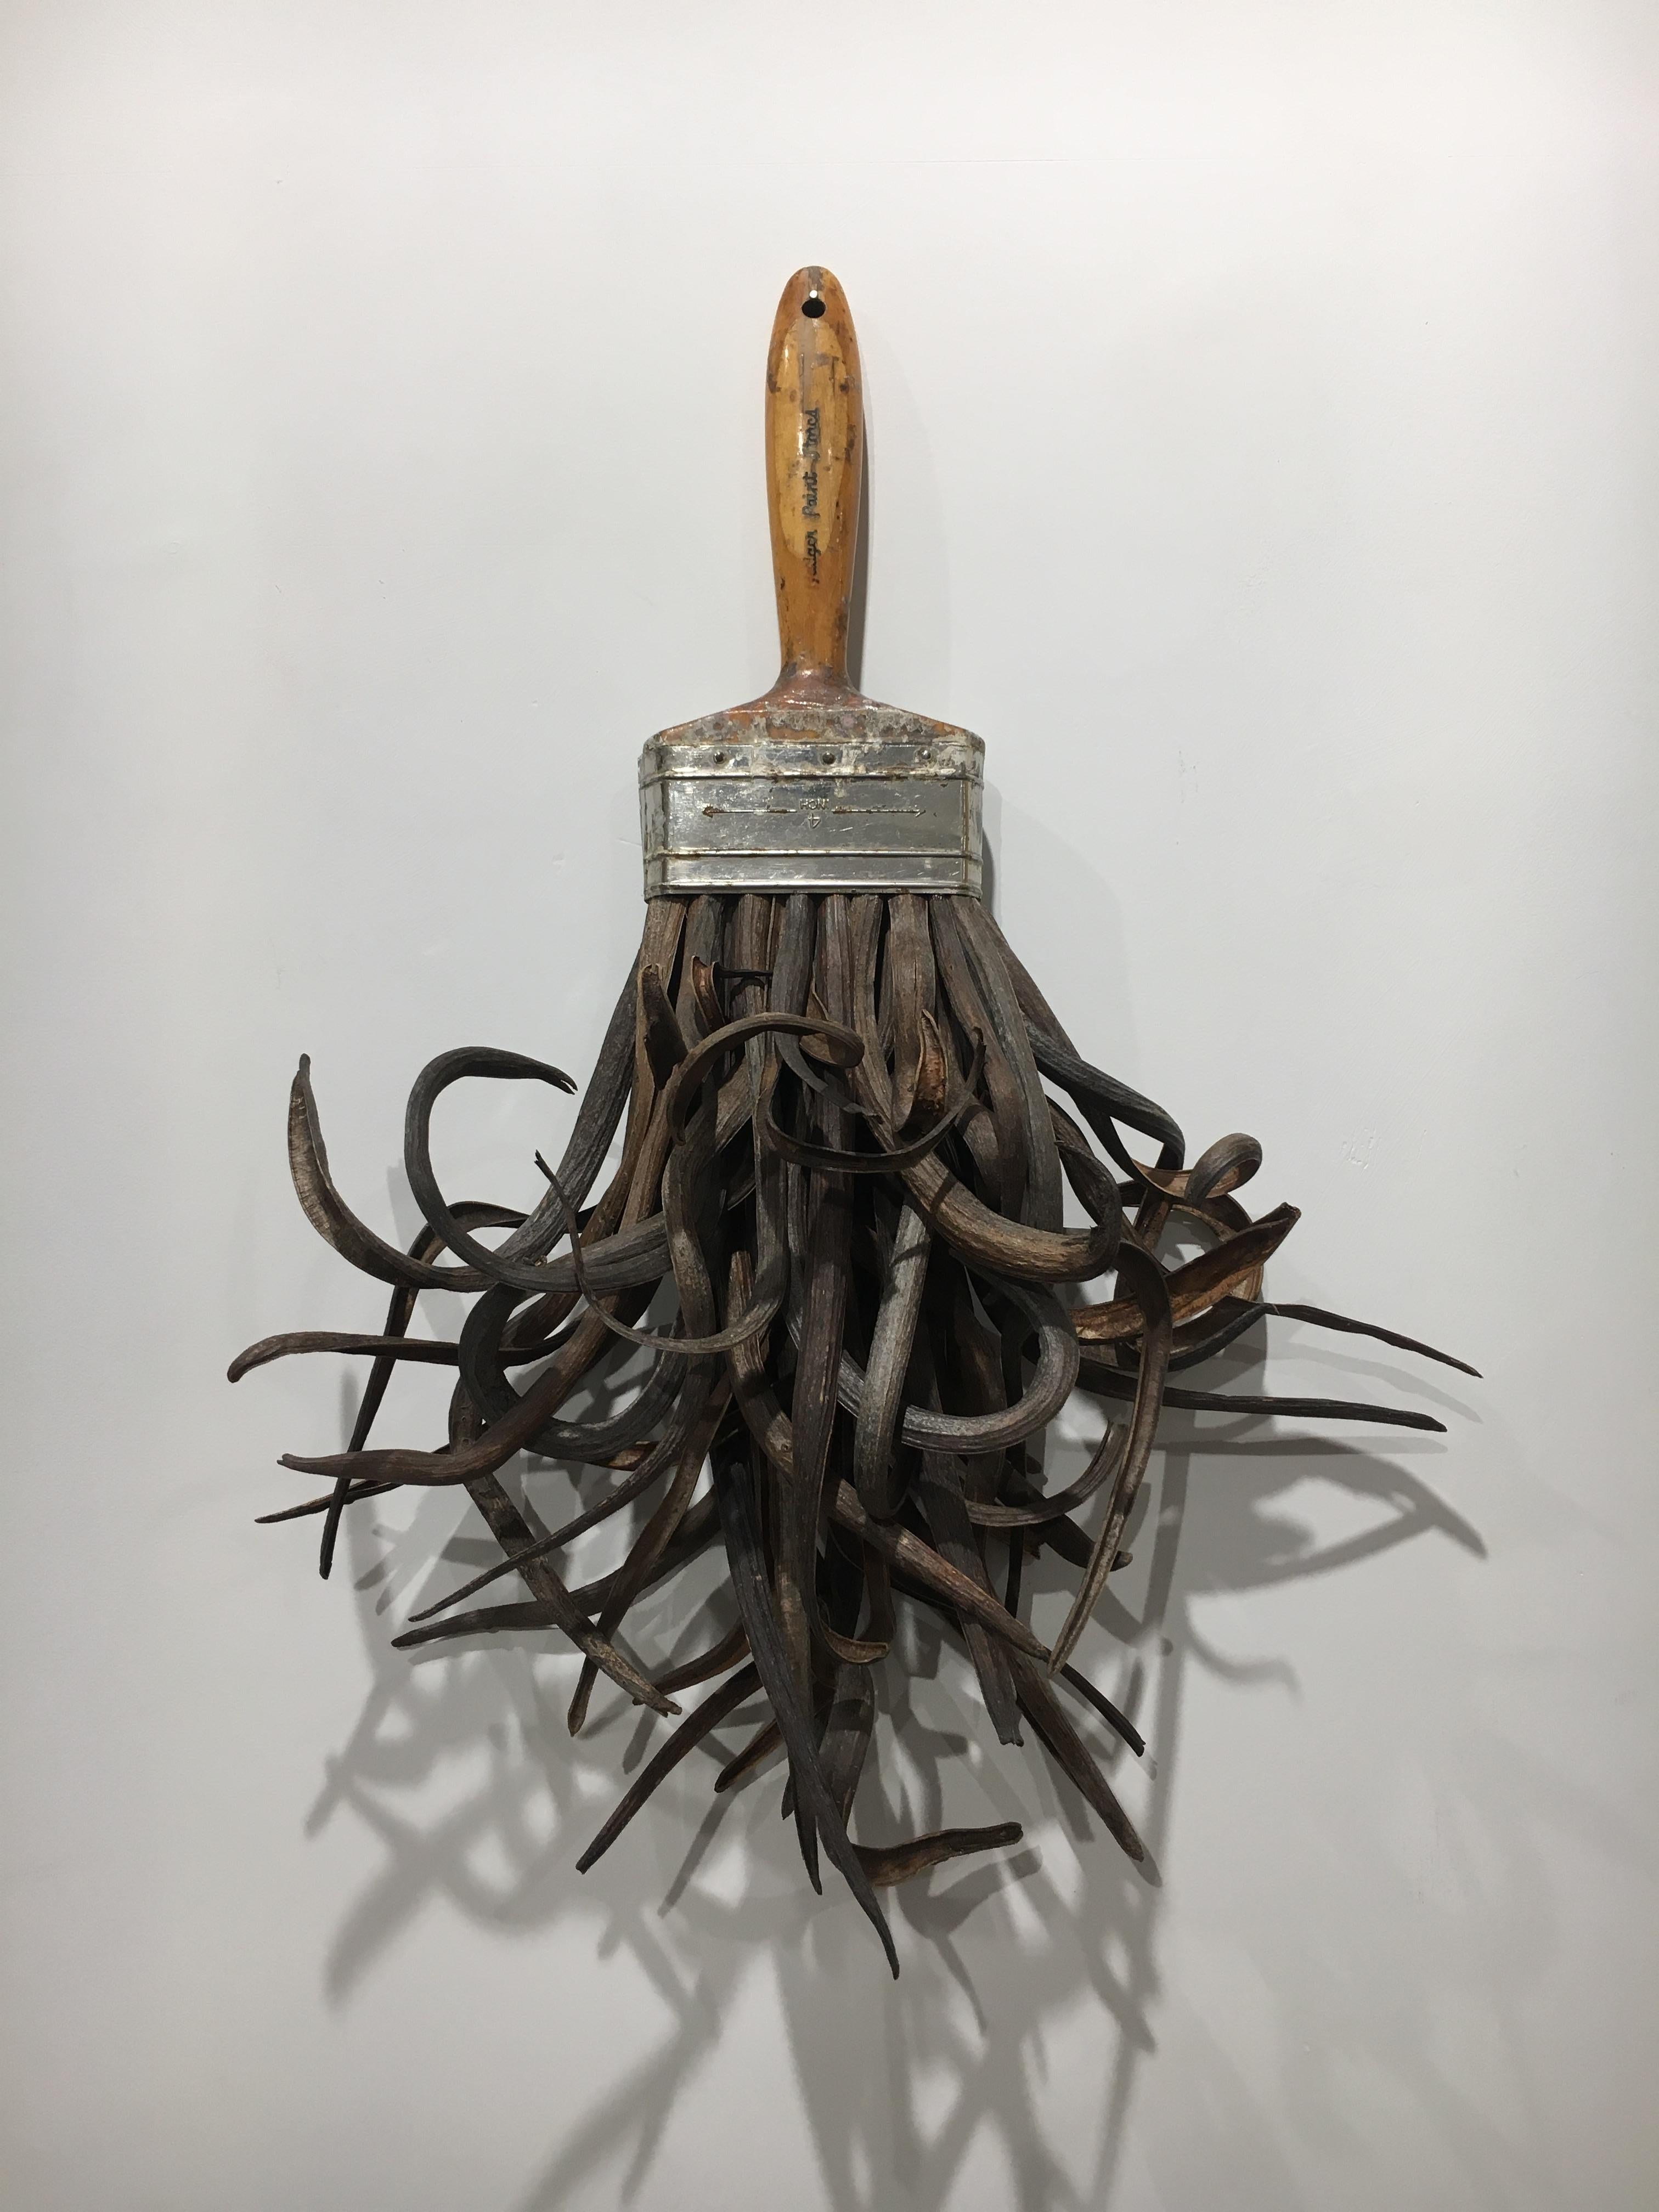 Howard Jones Still-Life Sculpture - Catalpa Brush, Mixed Media Surrealist Sculpture with Wood, Metal, and Organic